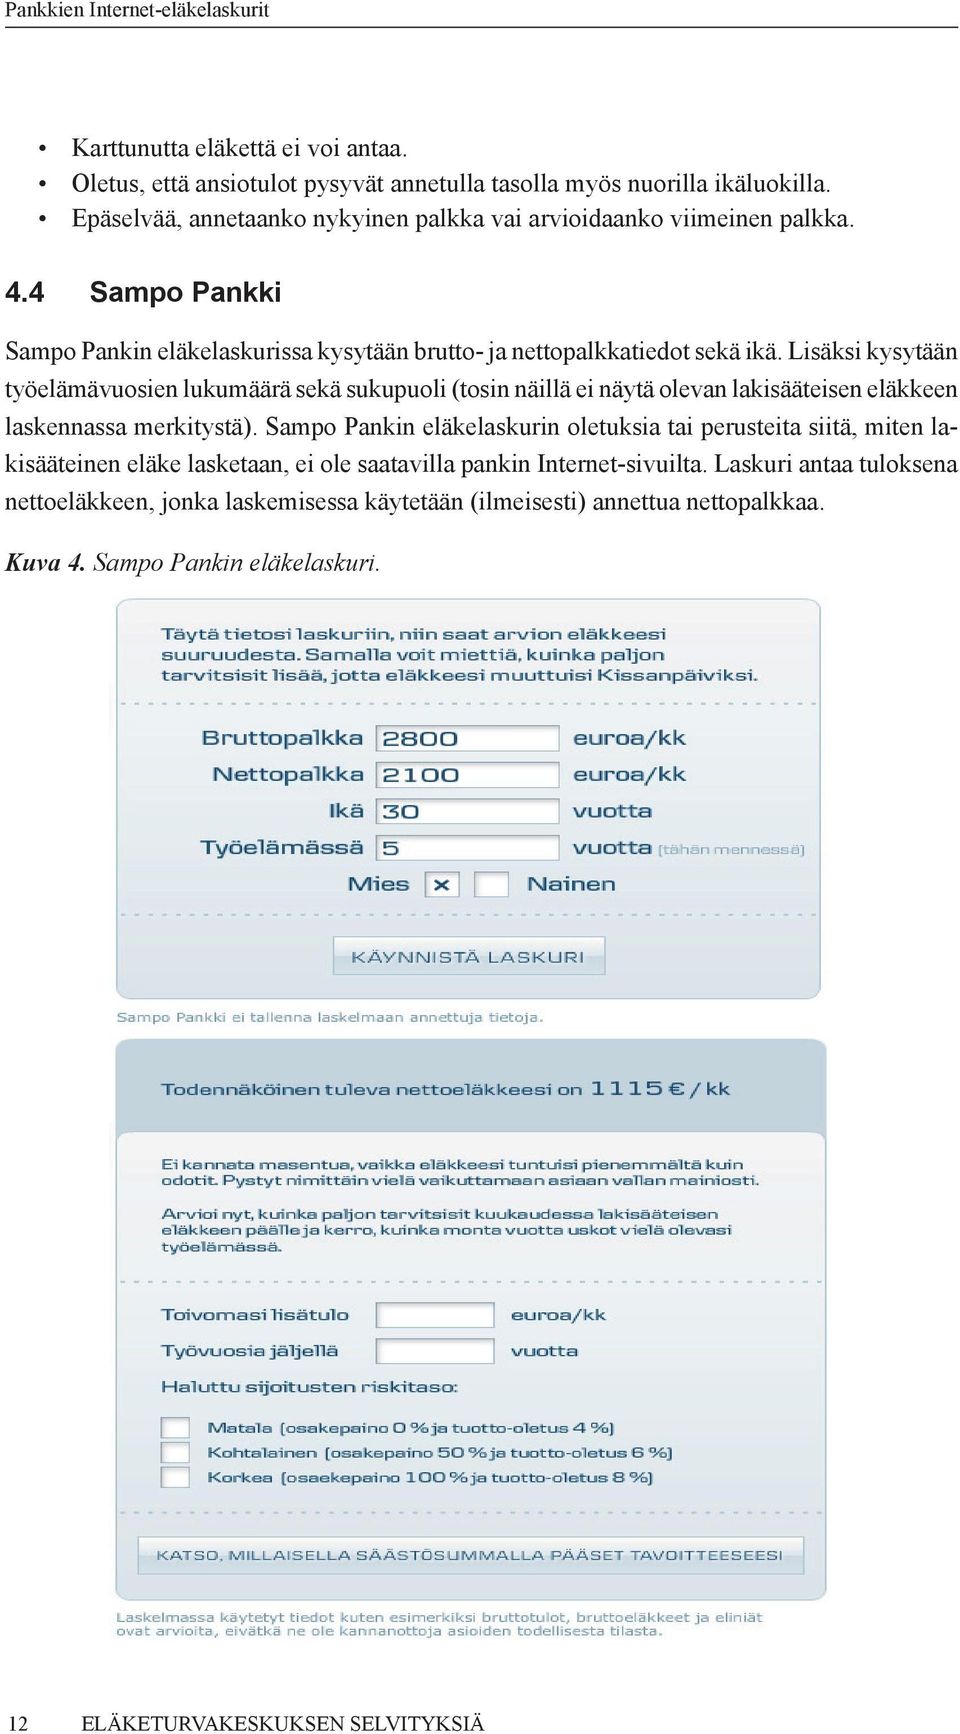 Pankkien Internet-eläkelaskurit - PDF Free Download